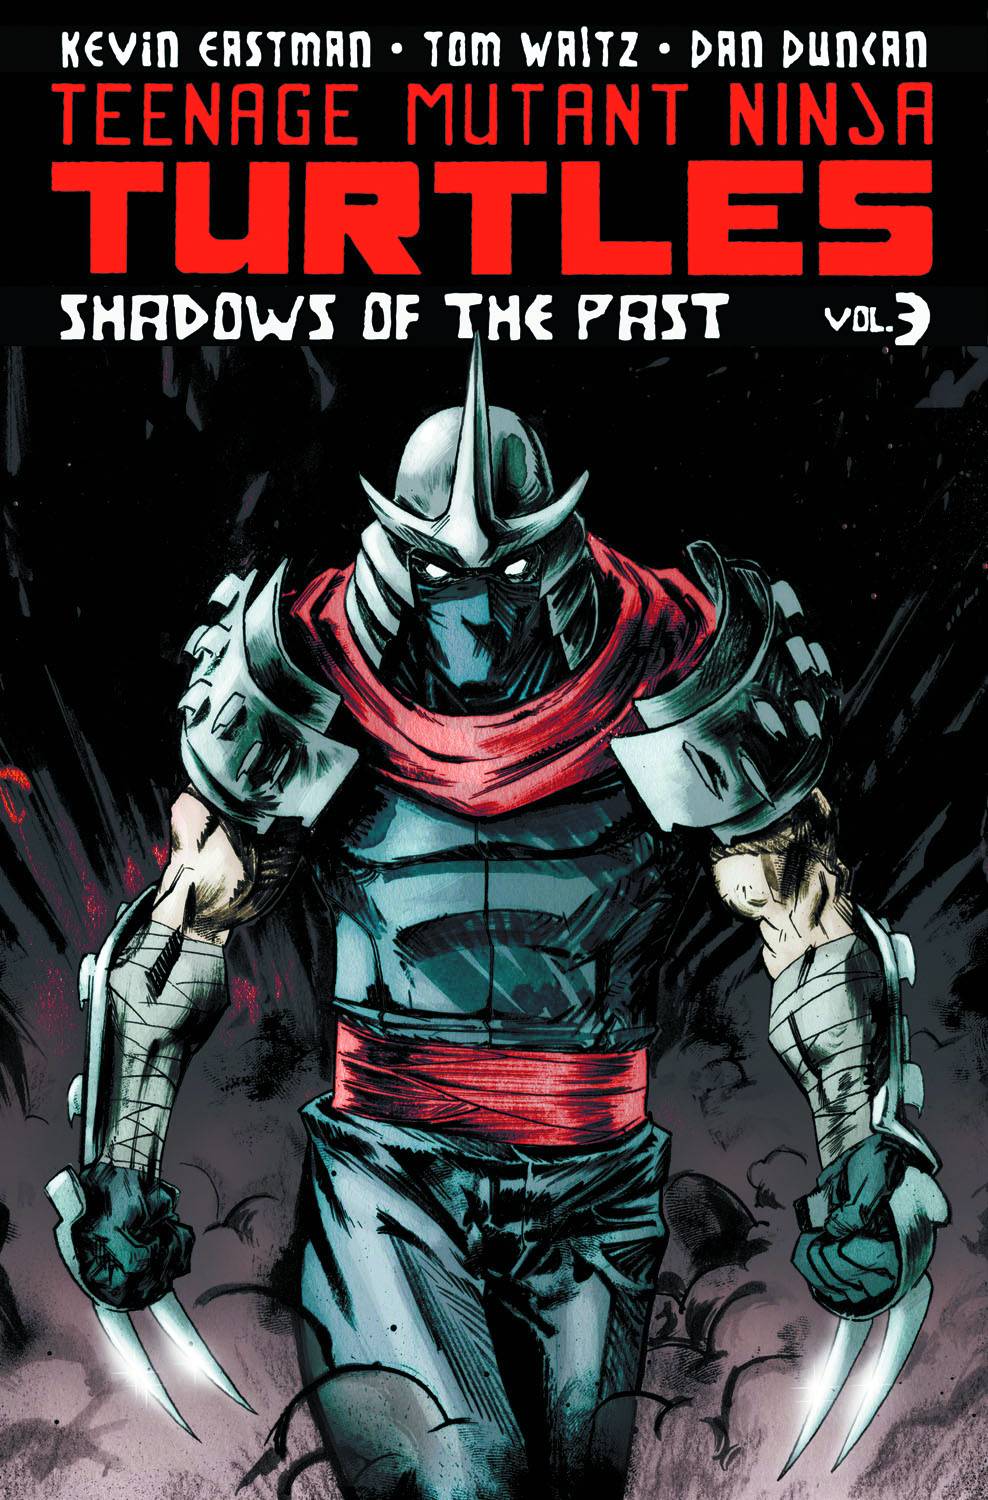 Teenage Mutant Ninja Turtles Ongoing Graphic Novel Volume 3 Shadows